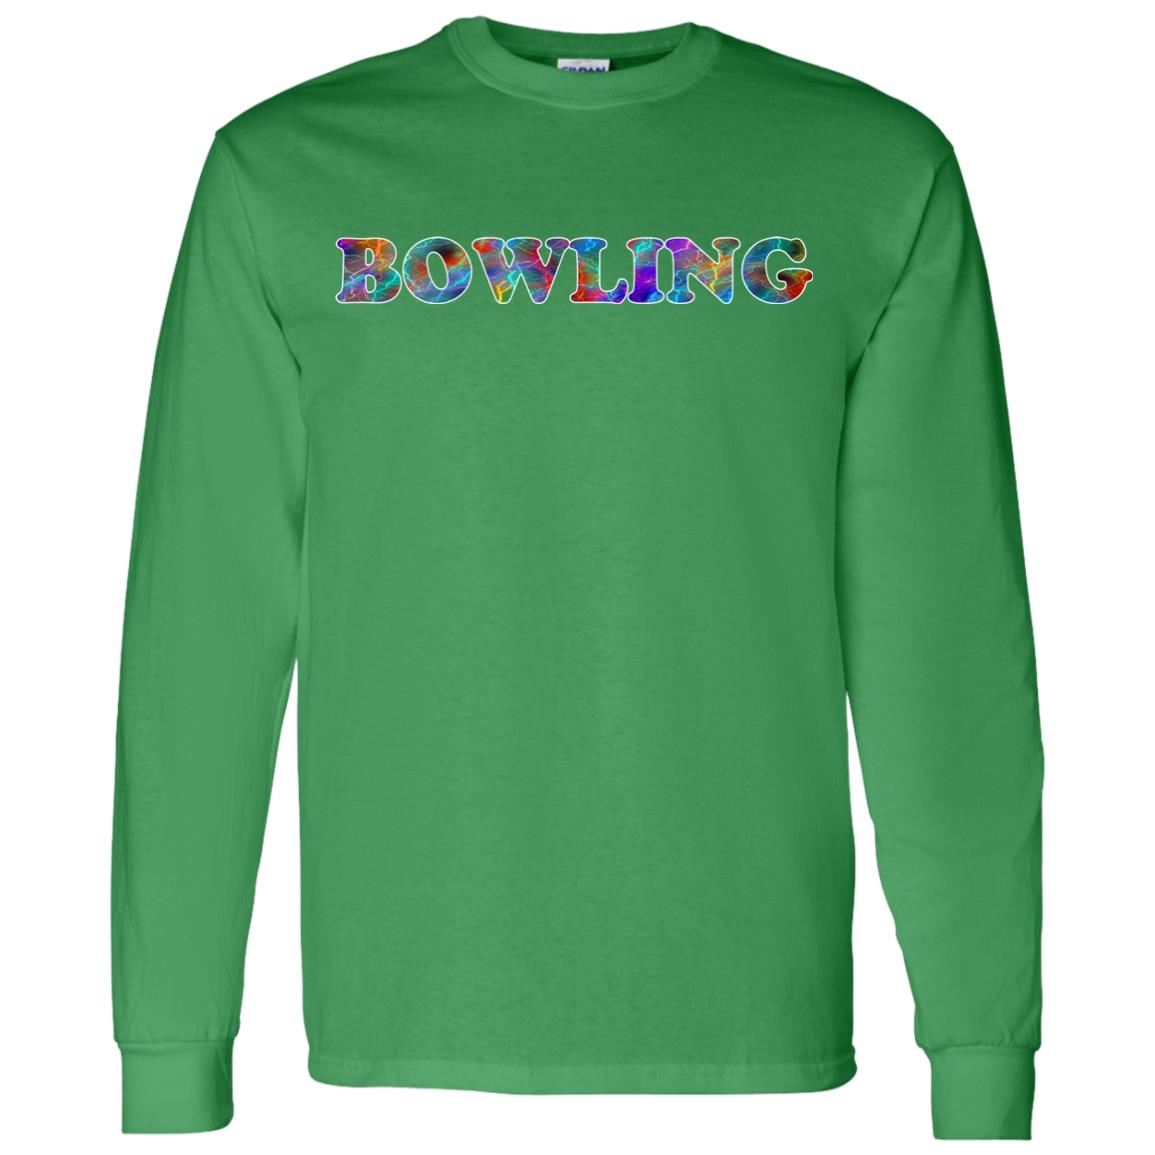 Bowling Long Sleeve T-Shirt